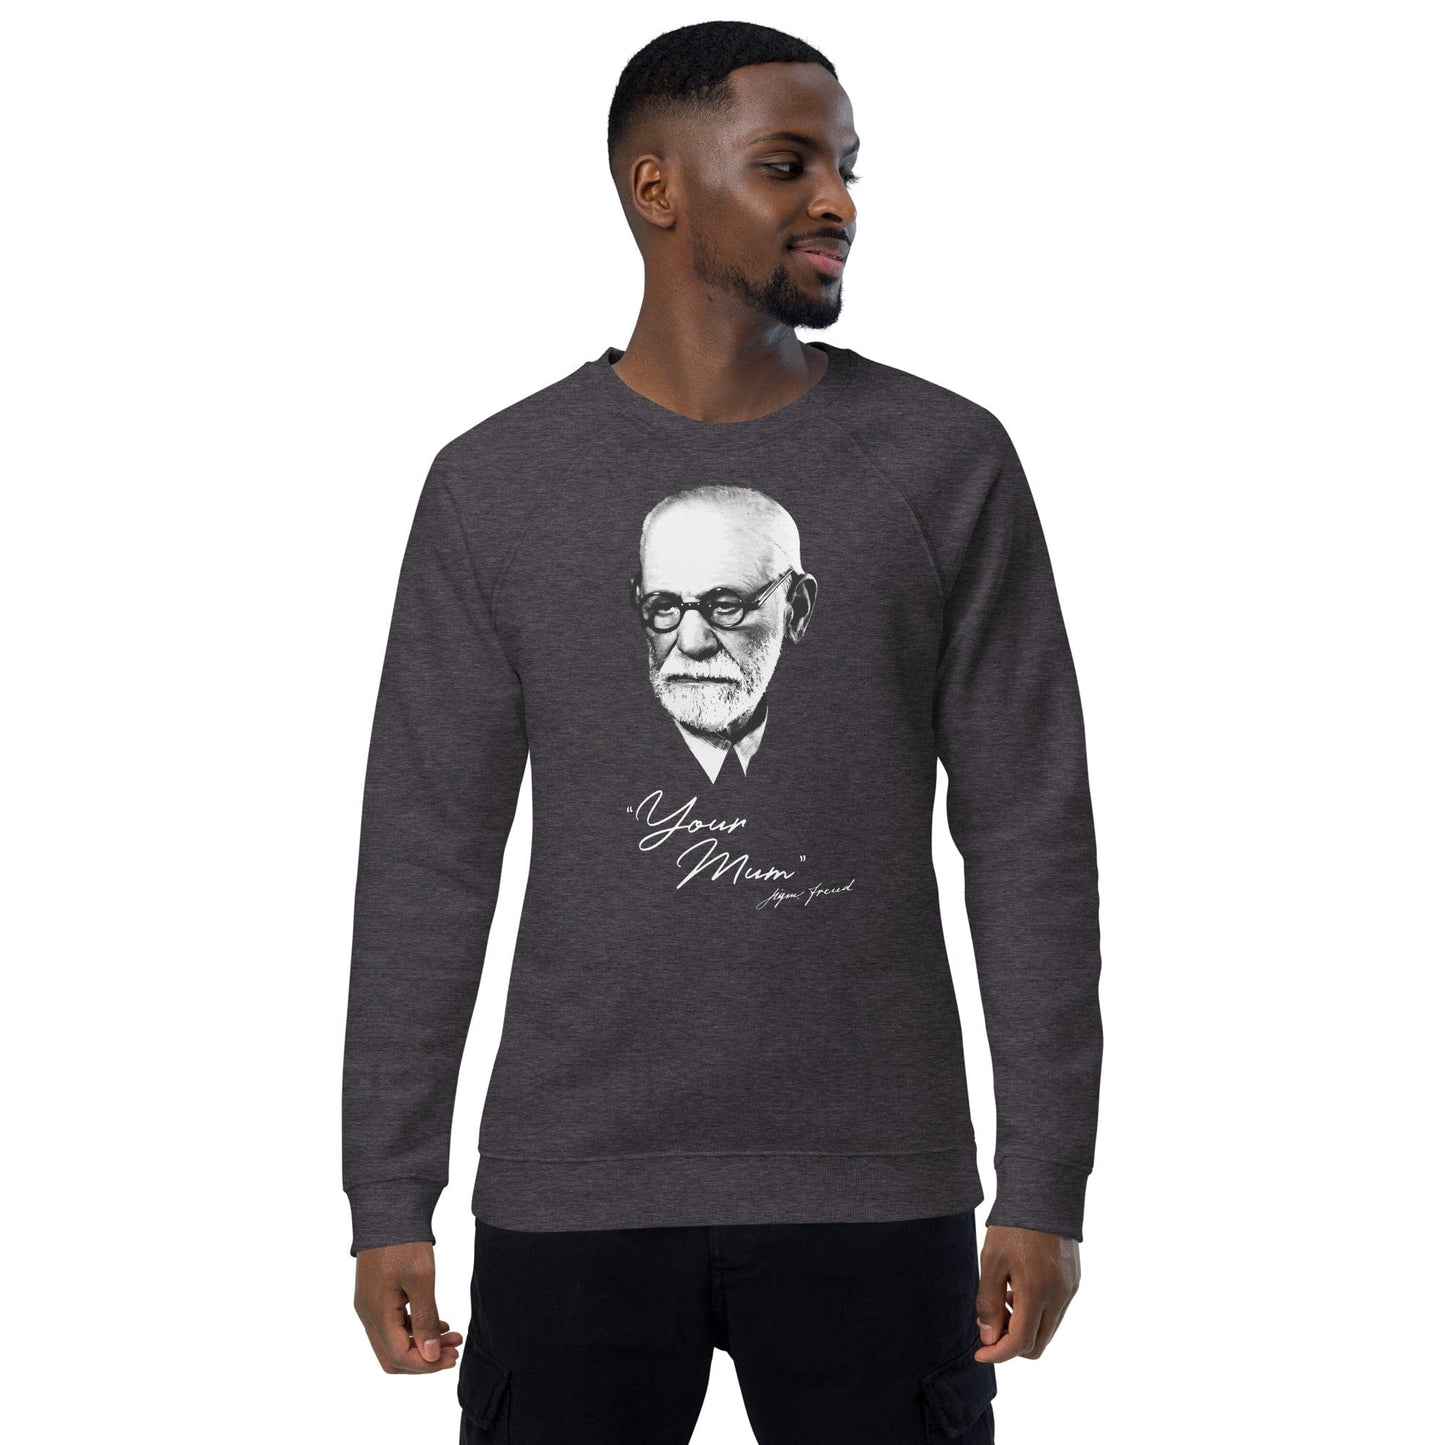 Sigmund Freud - Your Mum (UK) - Eco Sweatshirt